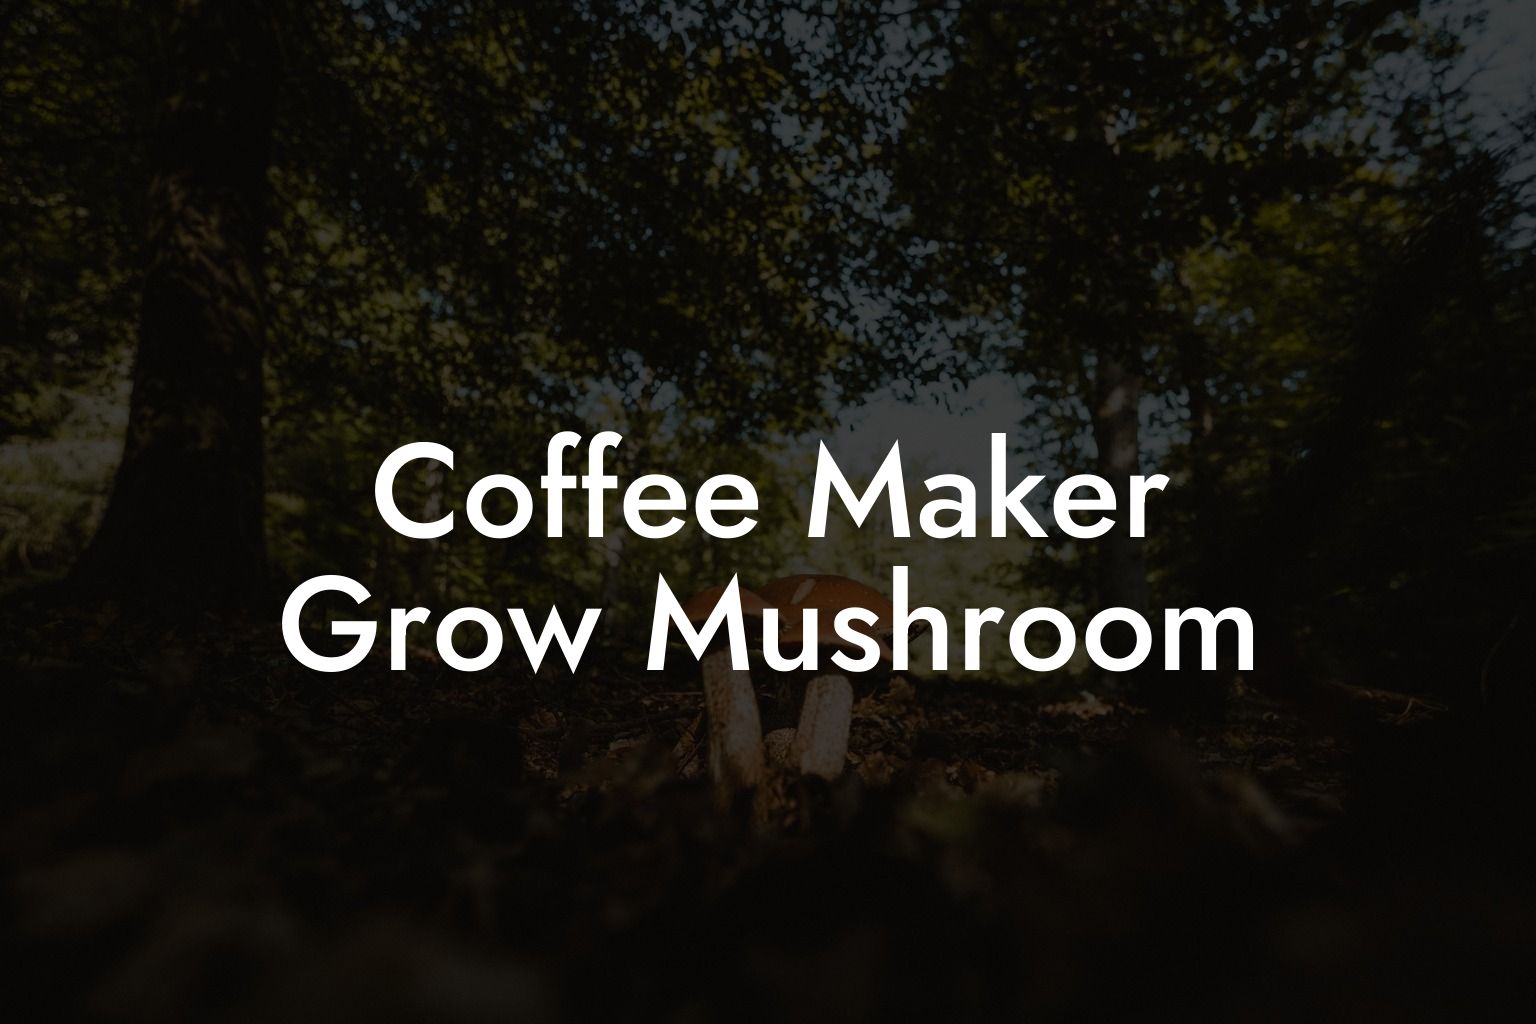 Coffee Maker Grow Mushroom